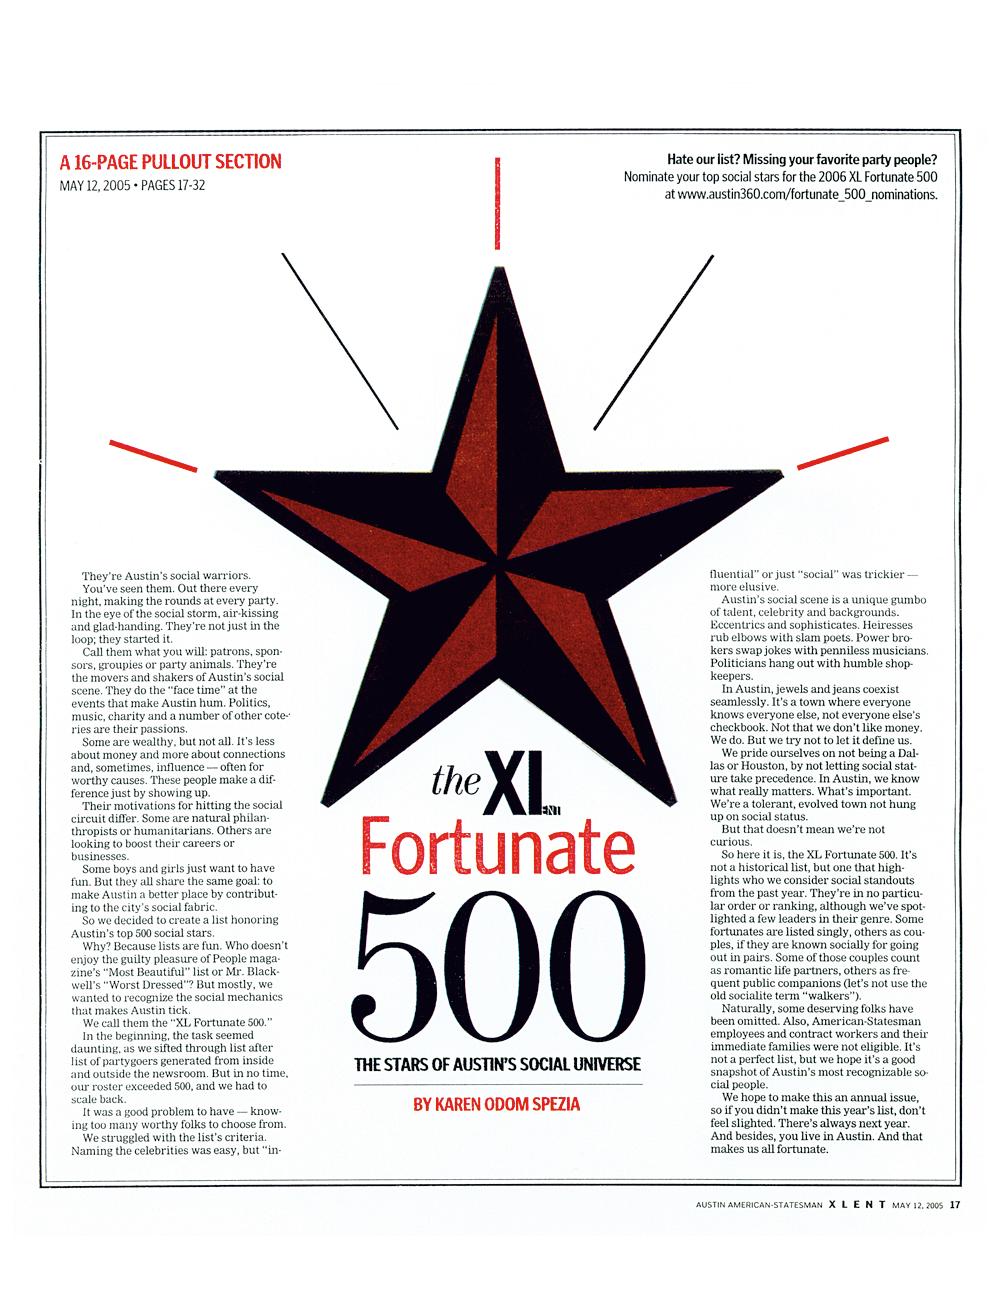 XL's Fortunate 500 - Austin American Statesman